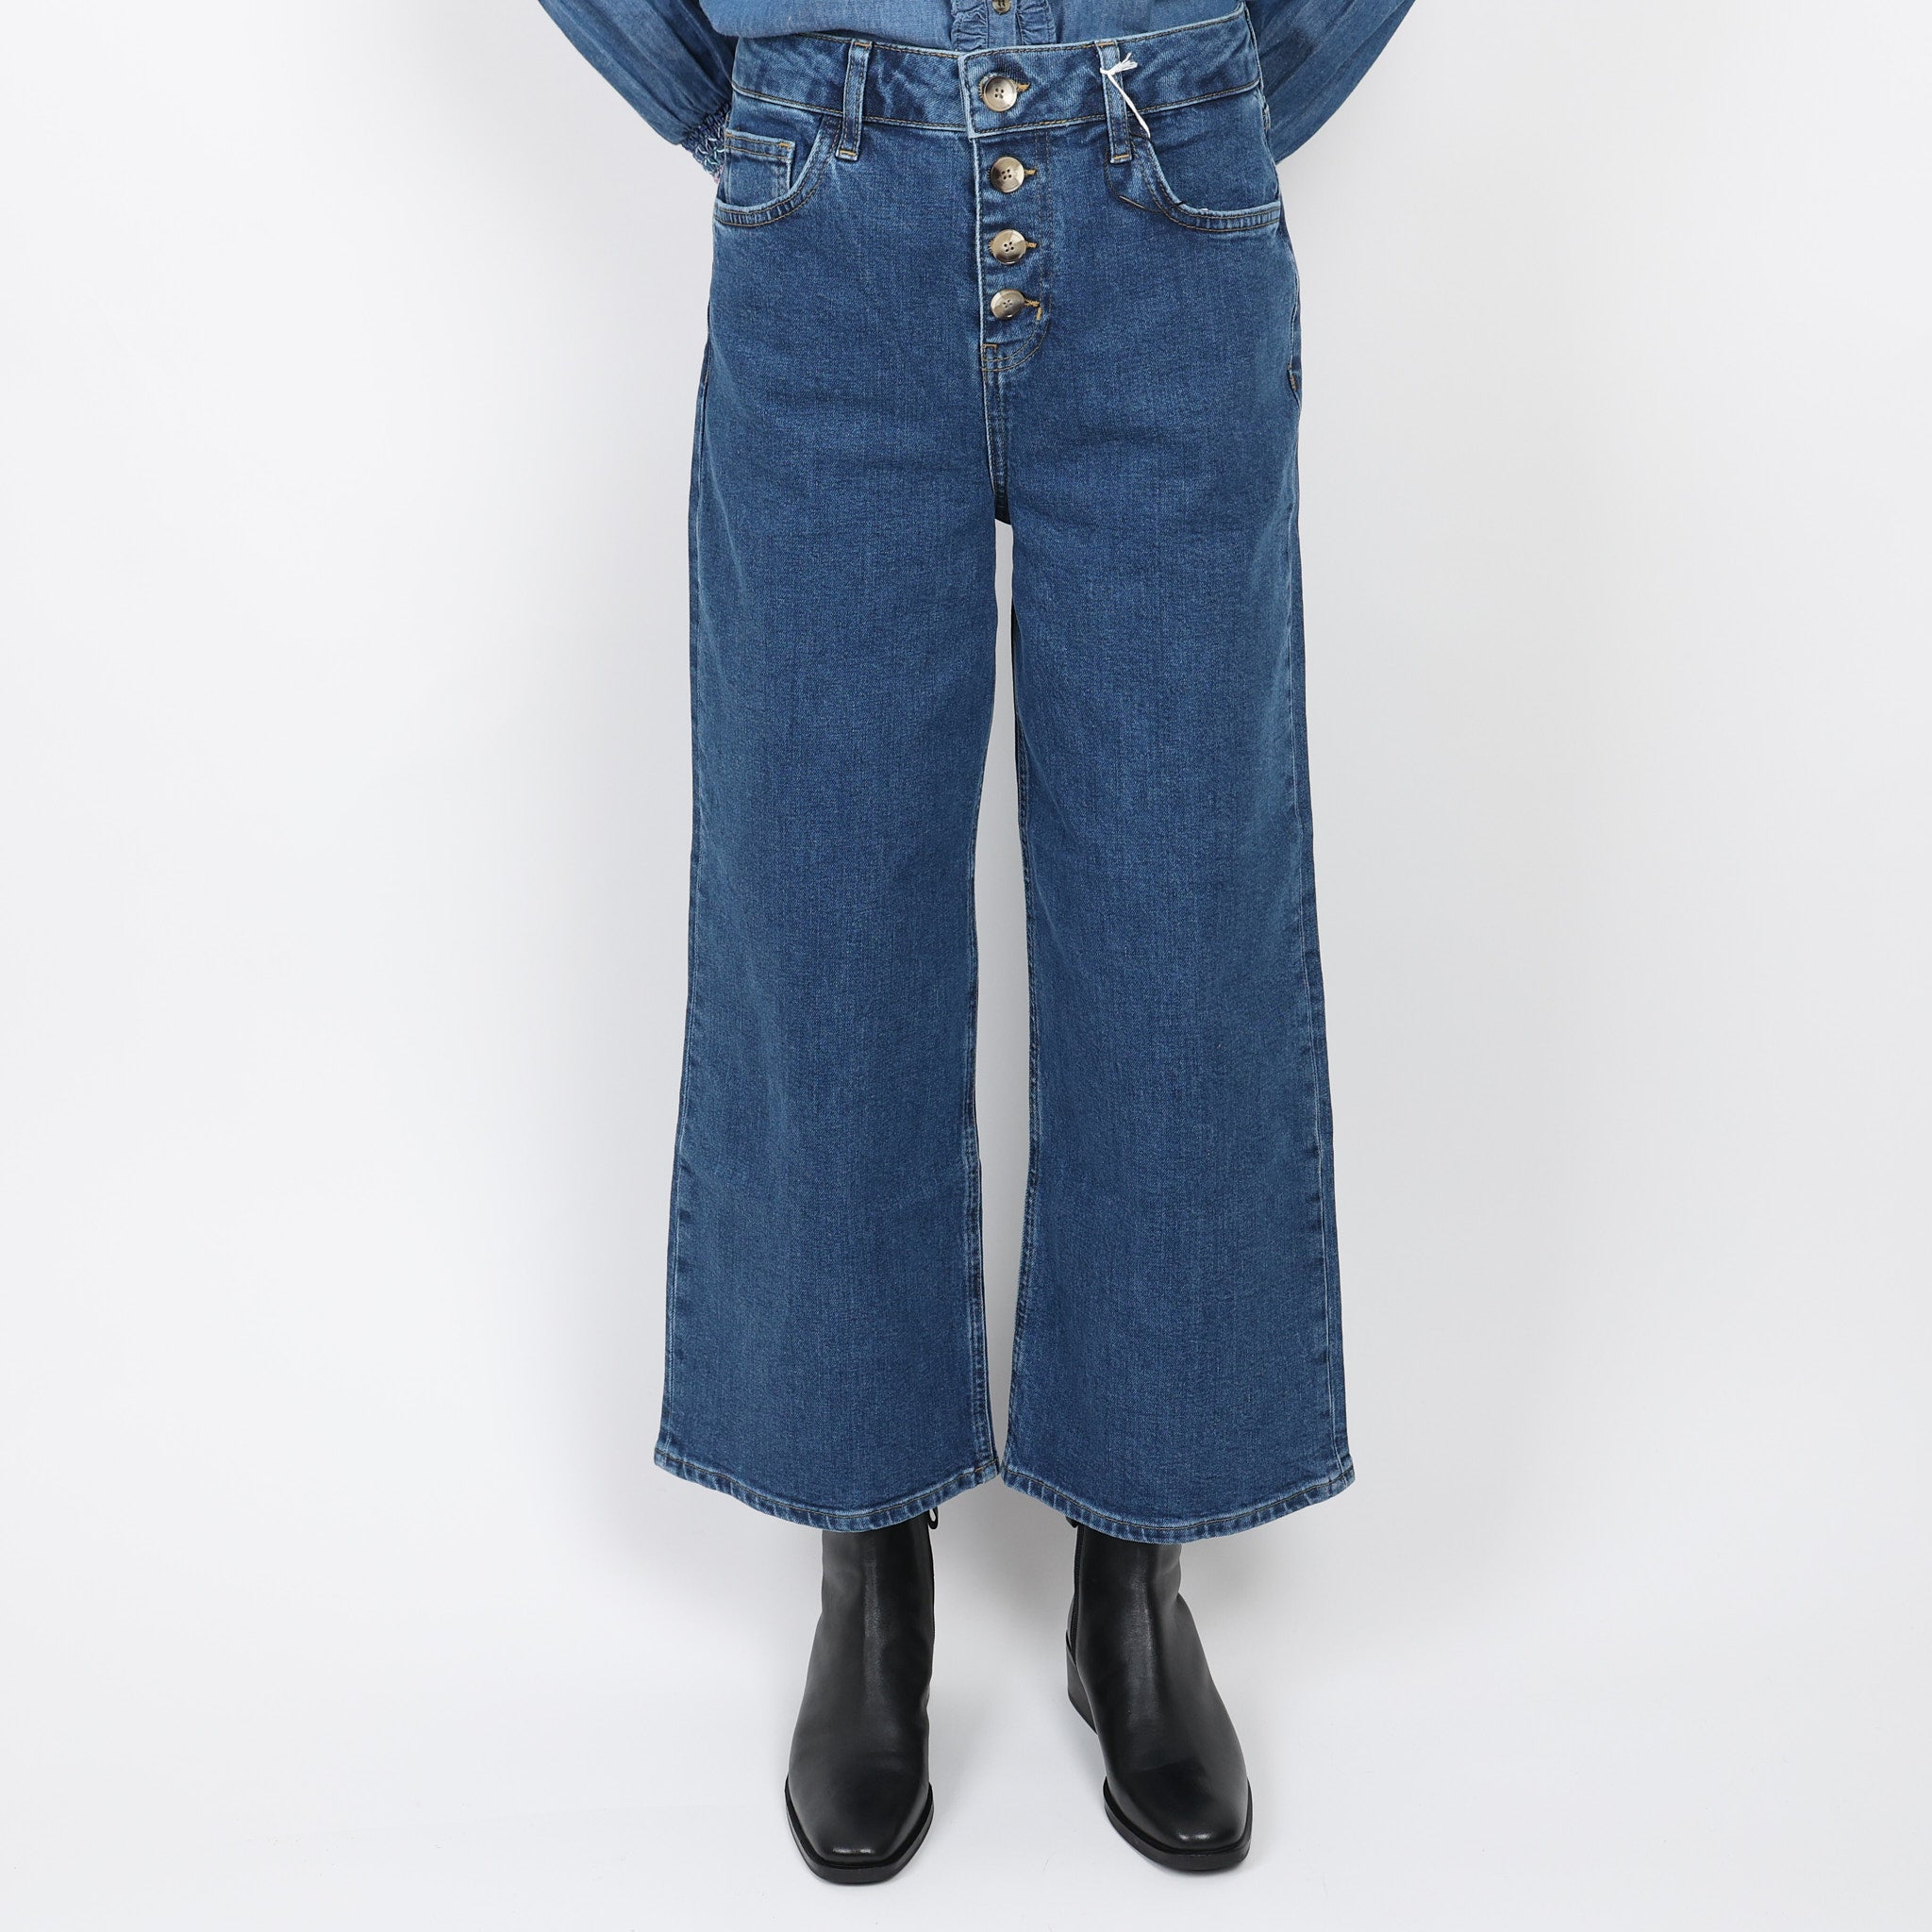 Jeans, UK Size 10